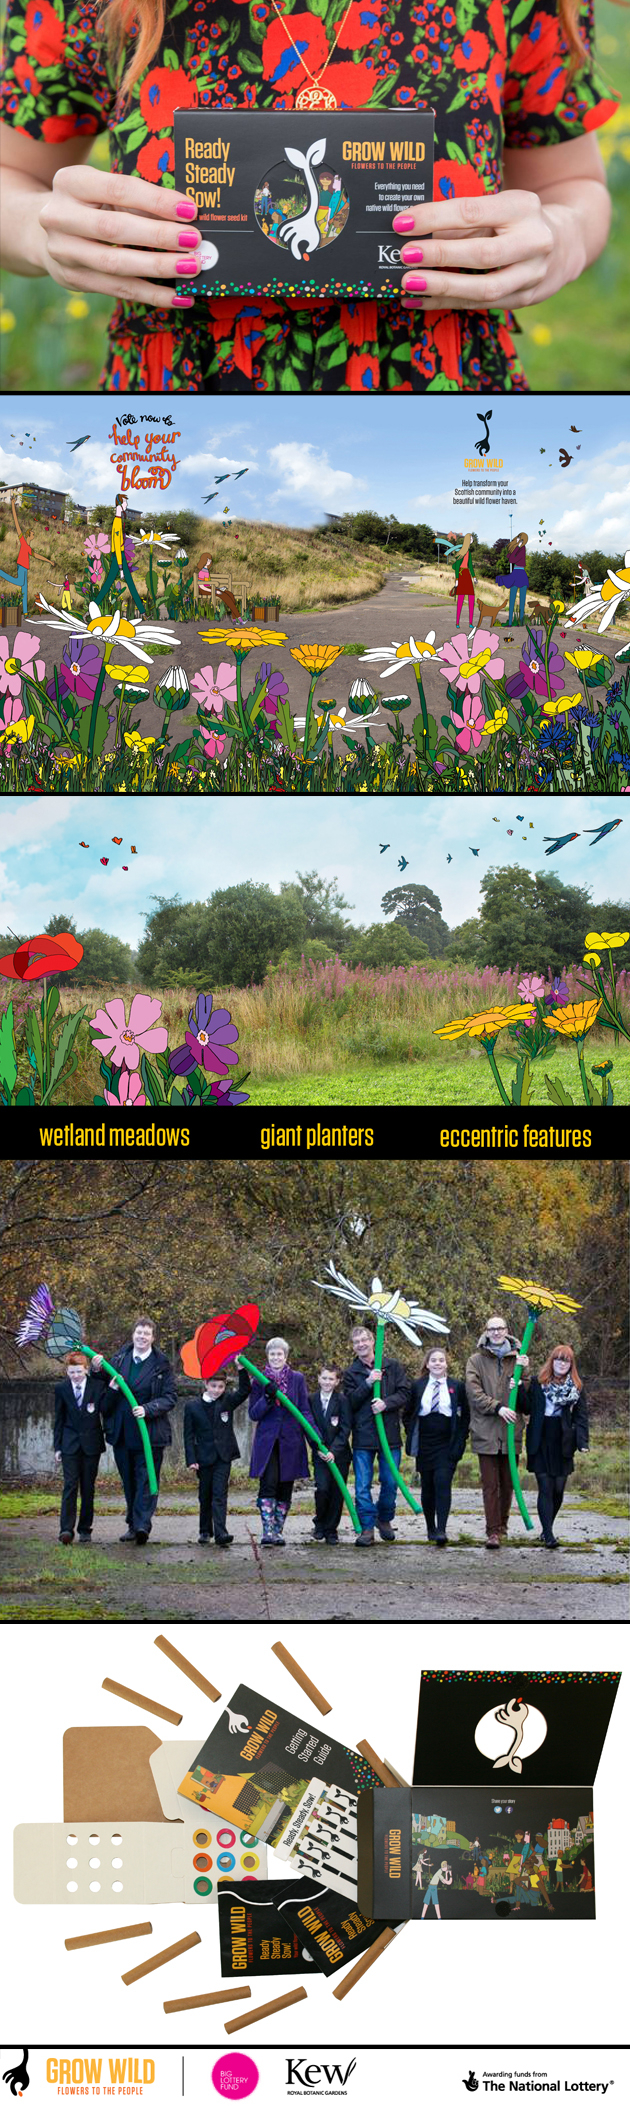 Celyn / Kew Gardens Grow Wild Campaign